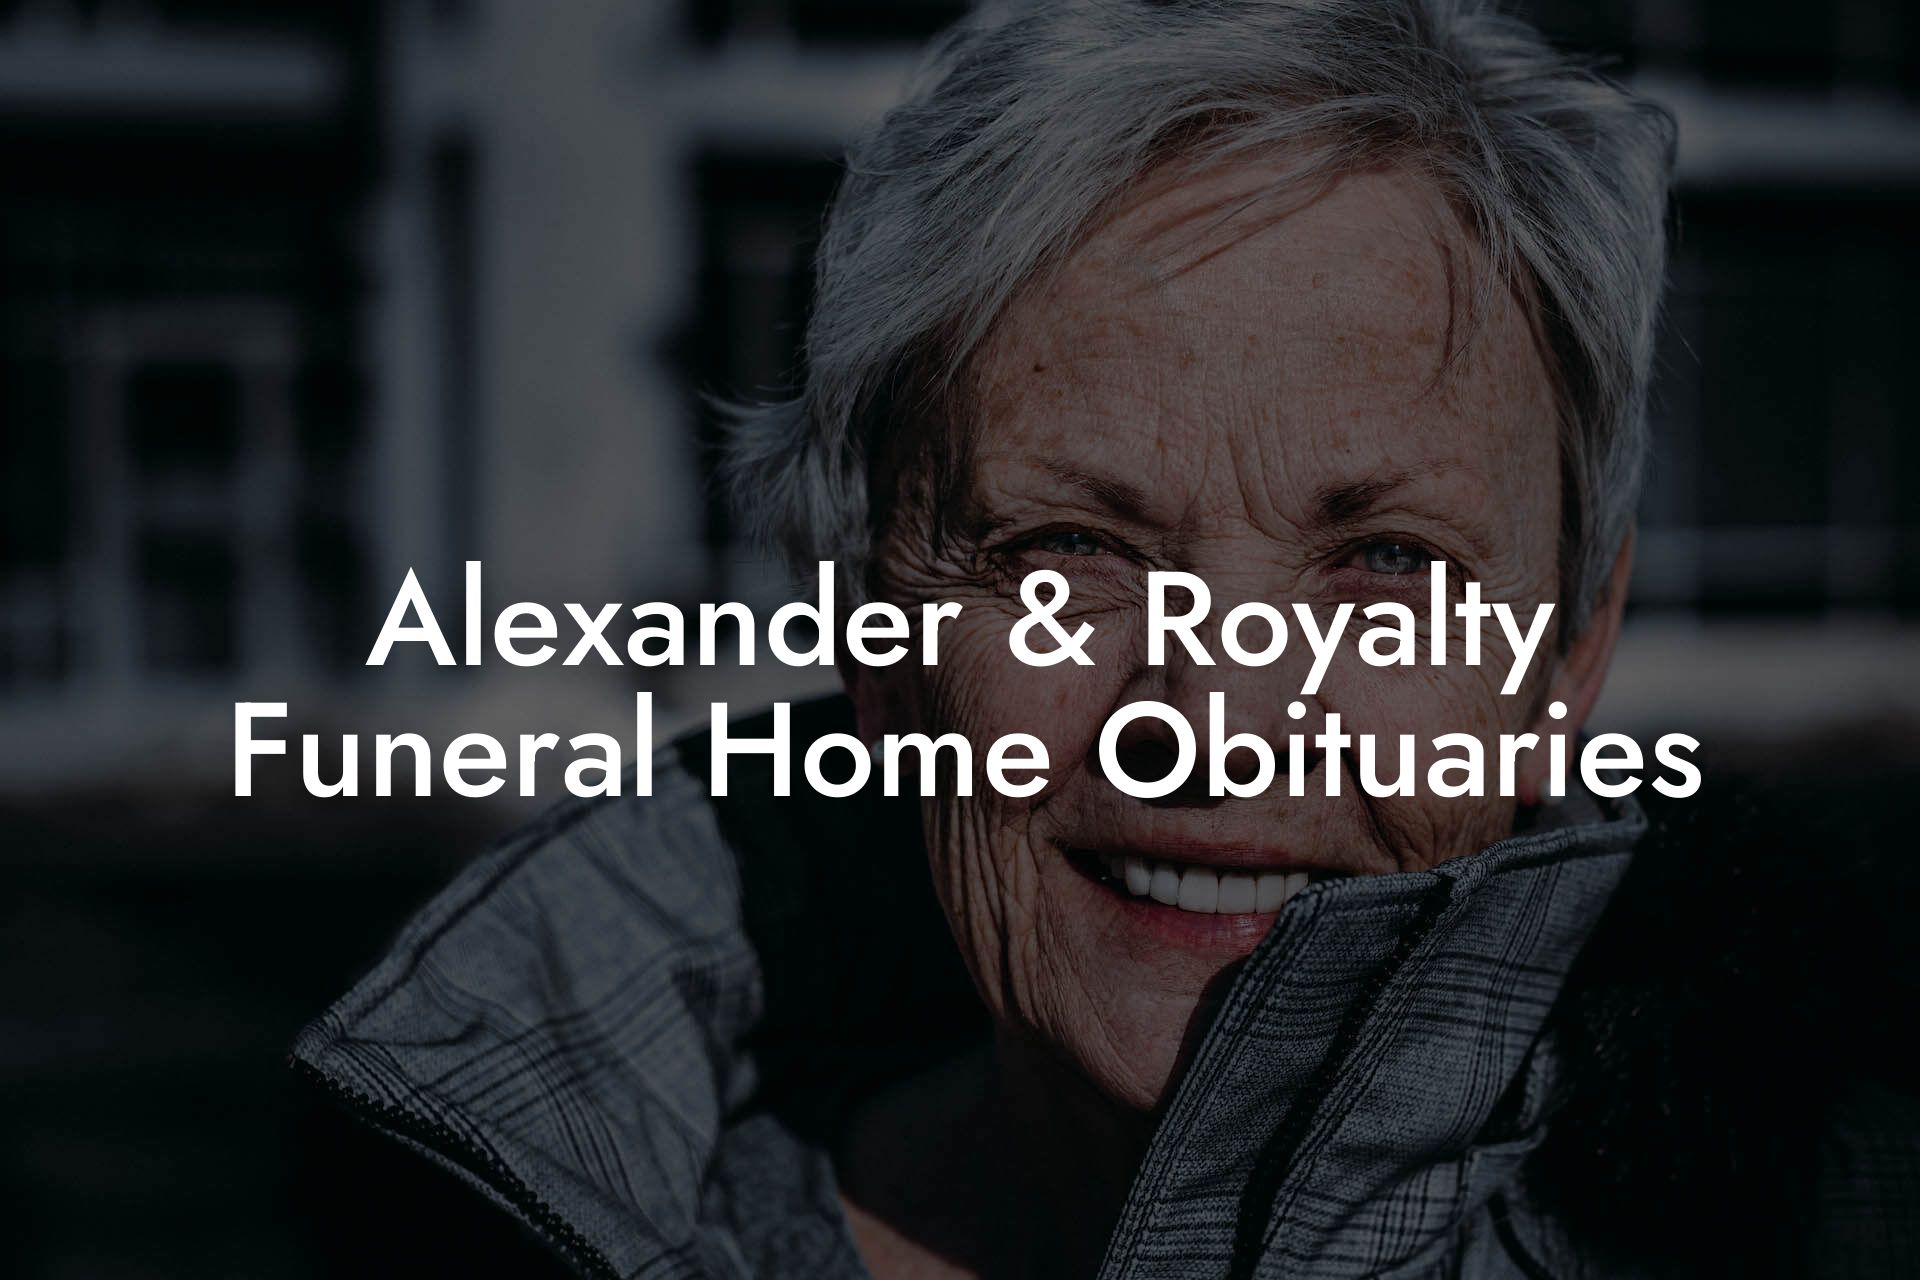 Alexander & Royalty Funeral Home Obituaries